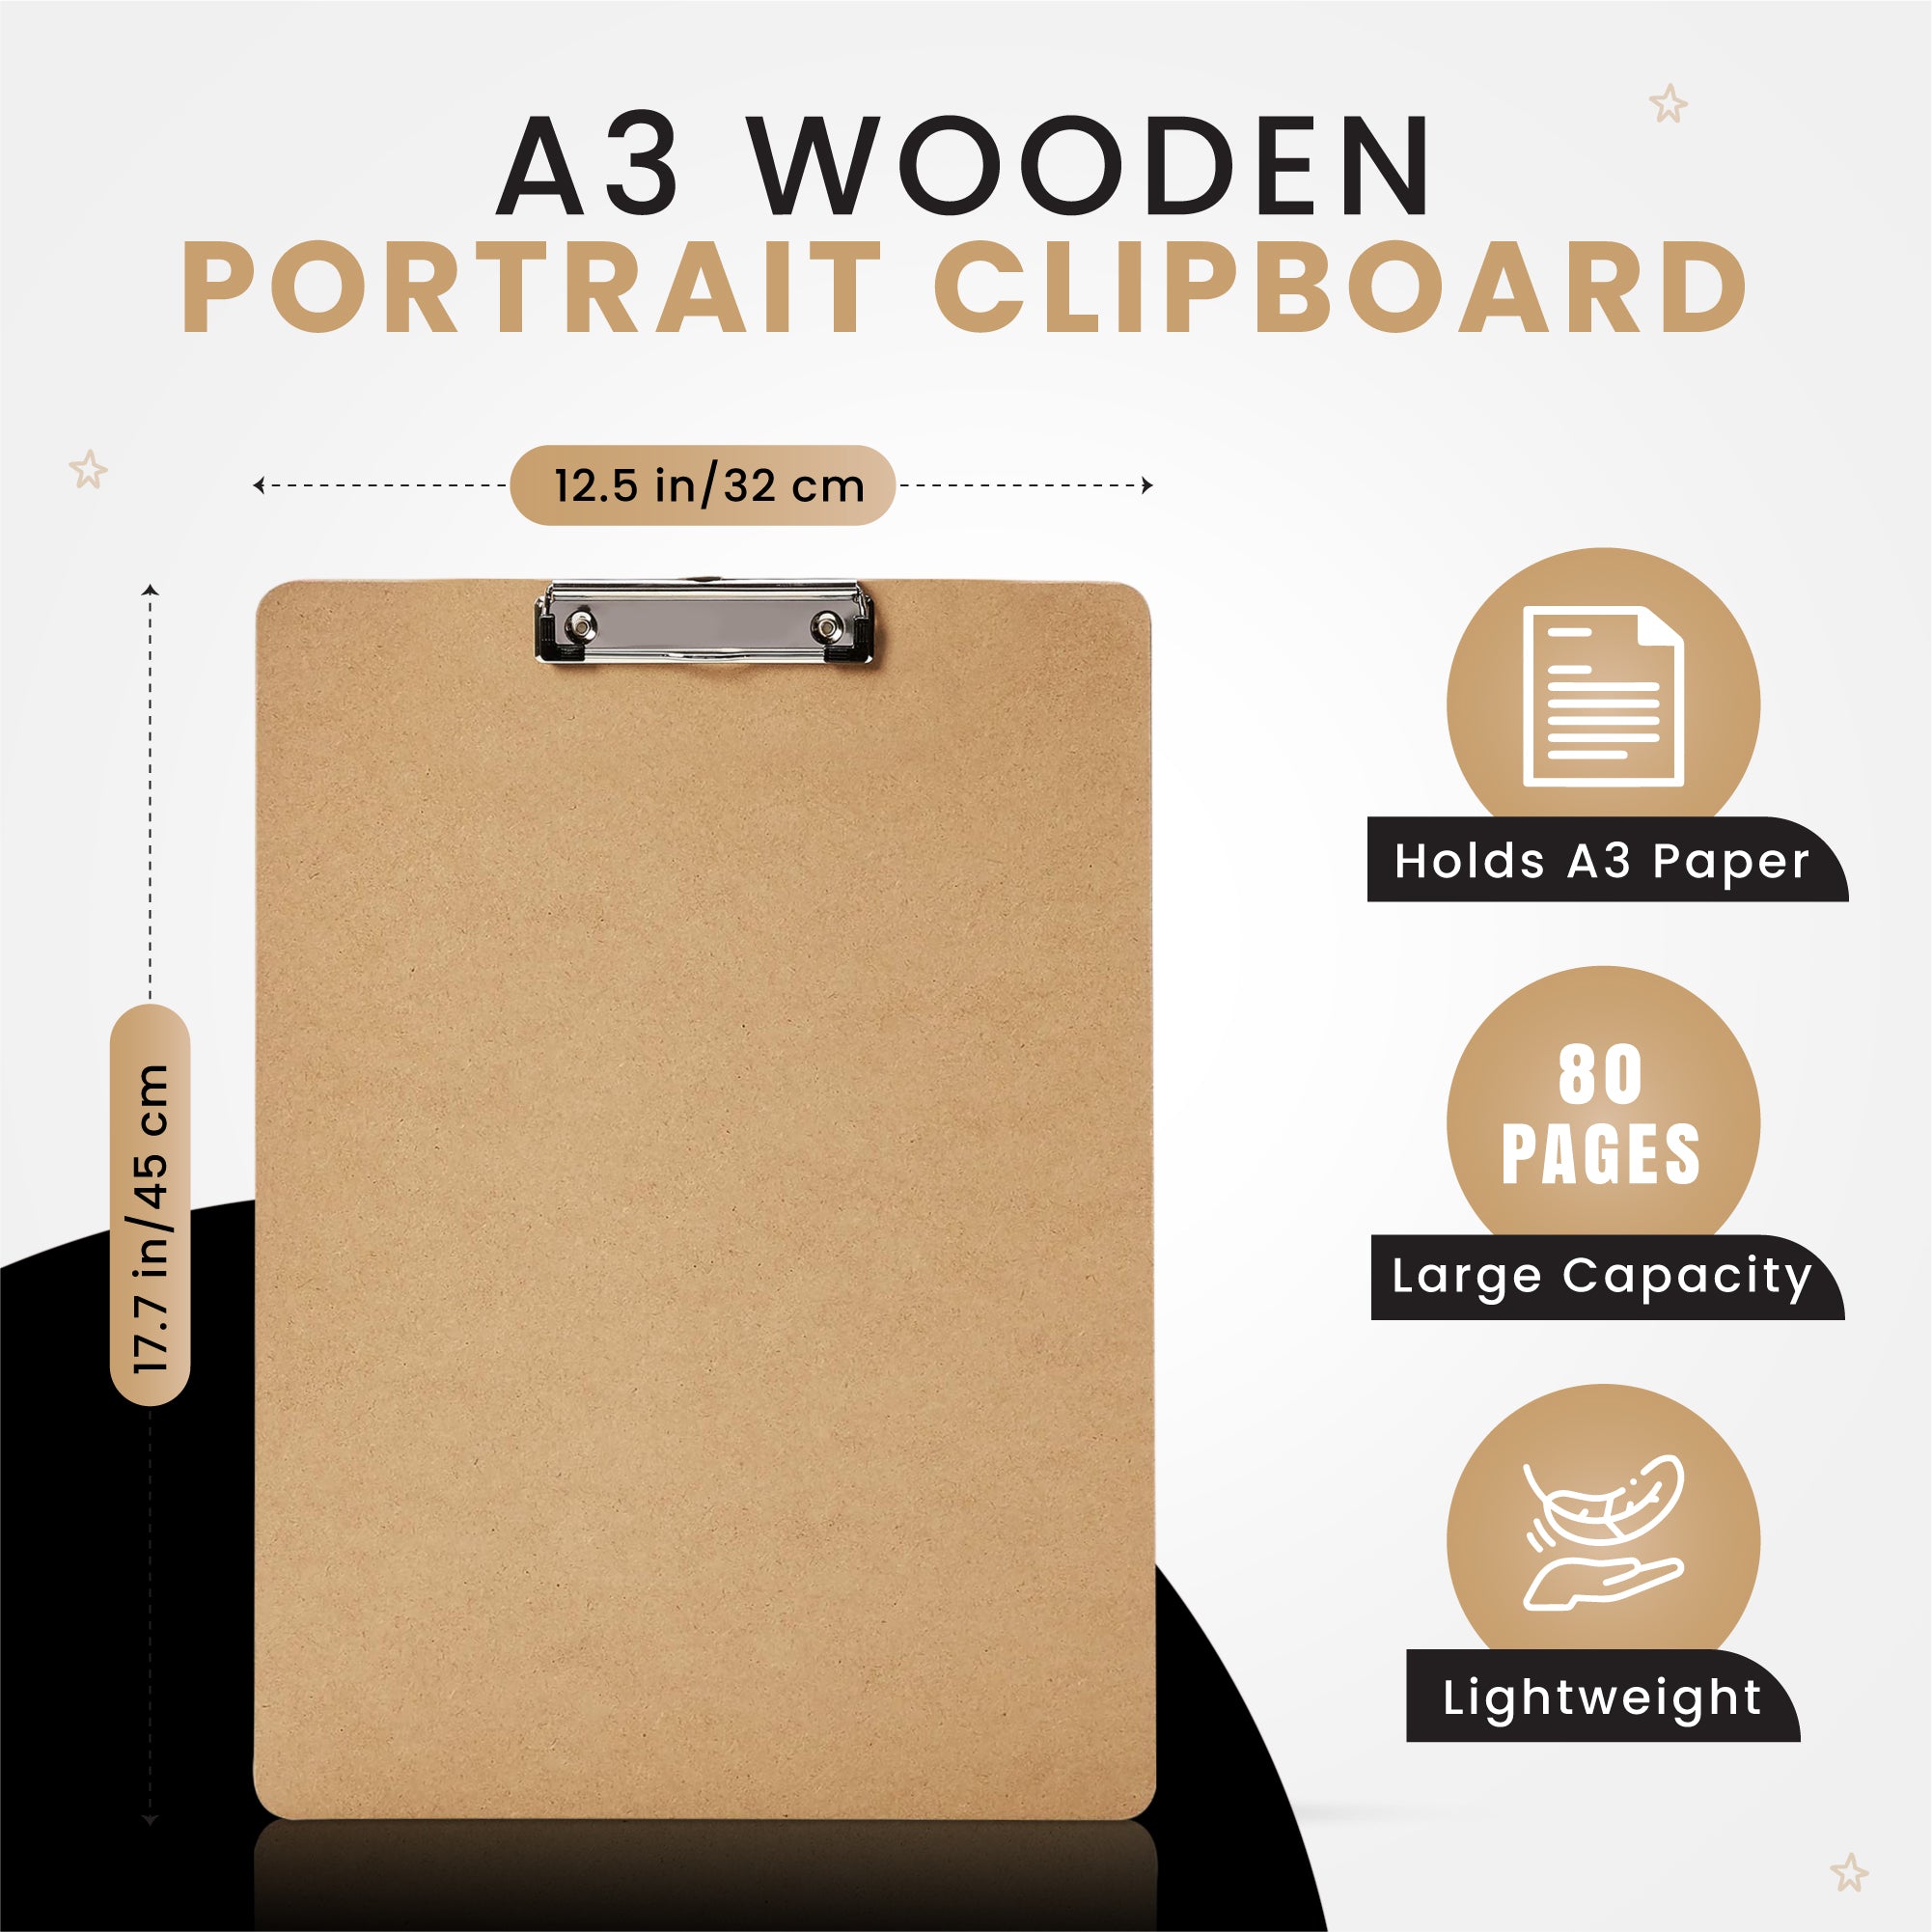 A3 Wooden Portrait Clipboard by Janrax